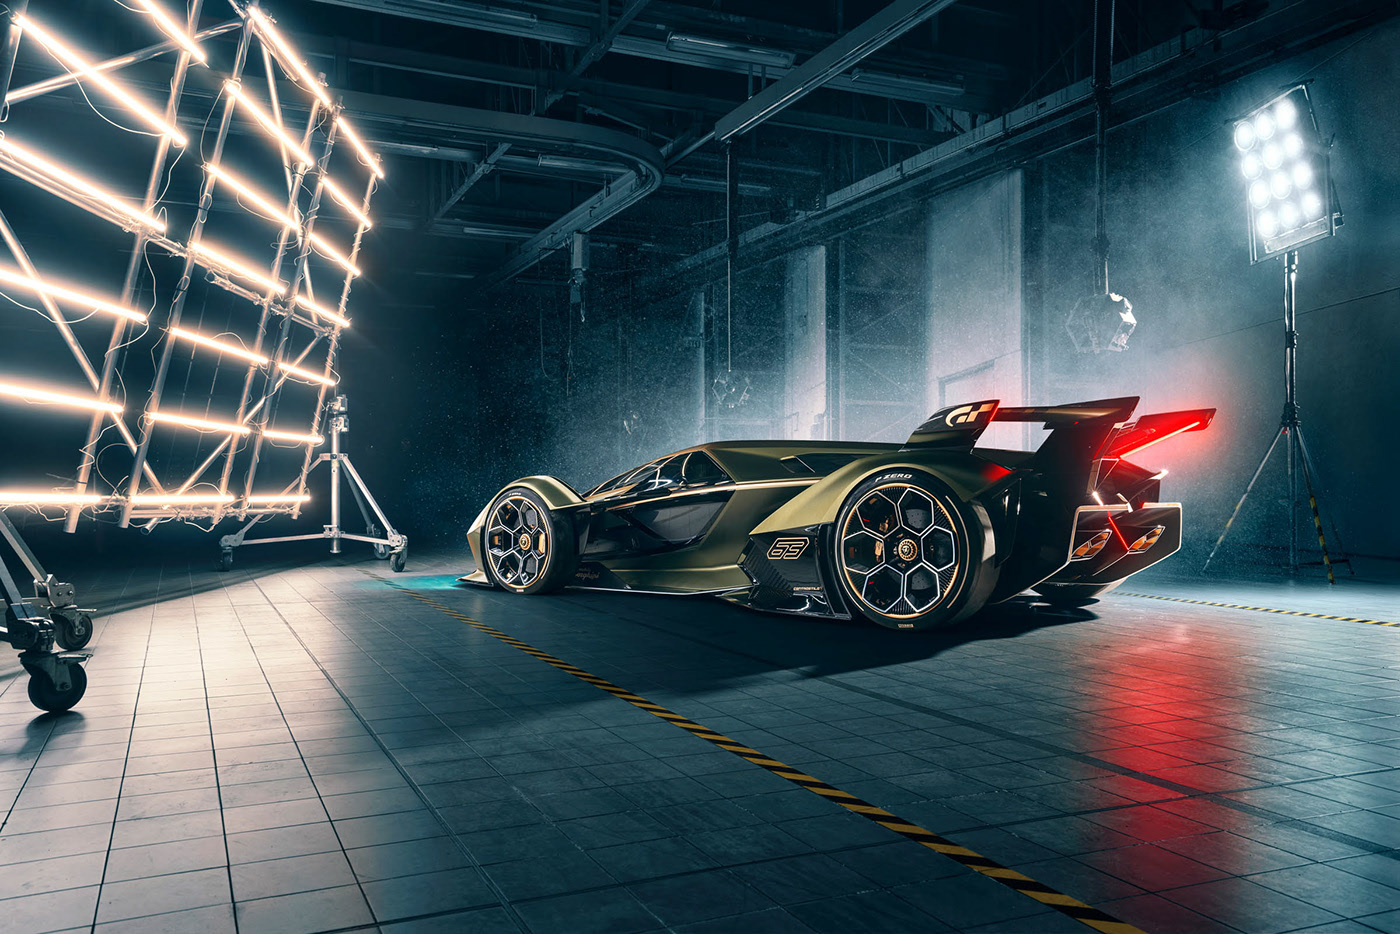 Lamborghini VisionGT & Terzo Millennio Concept Cars on Behance